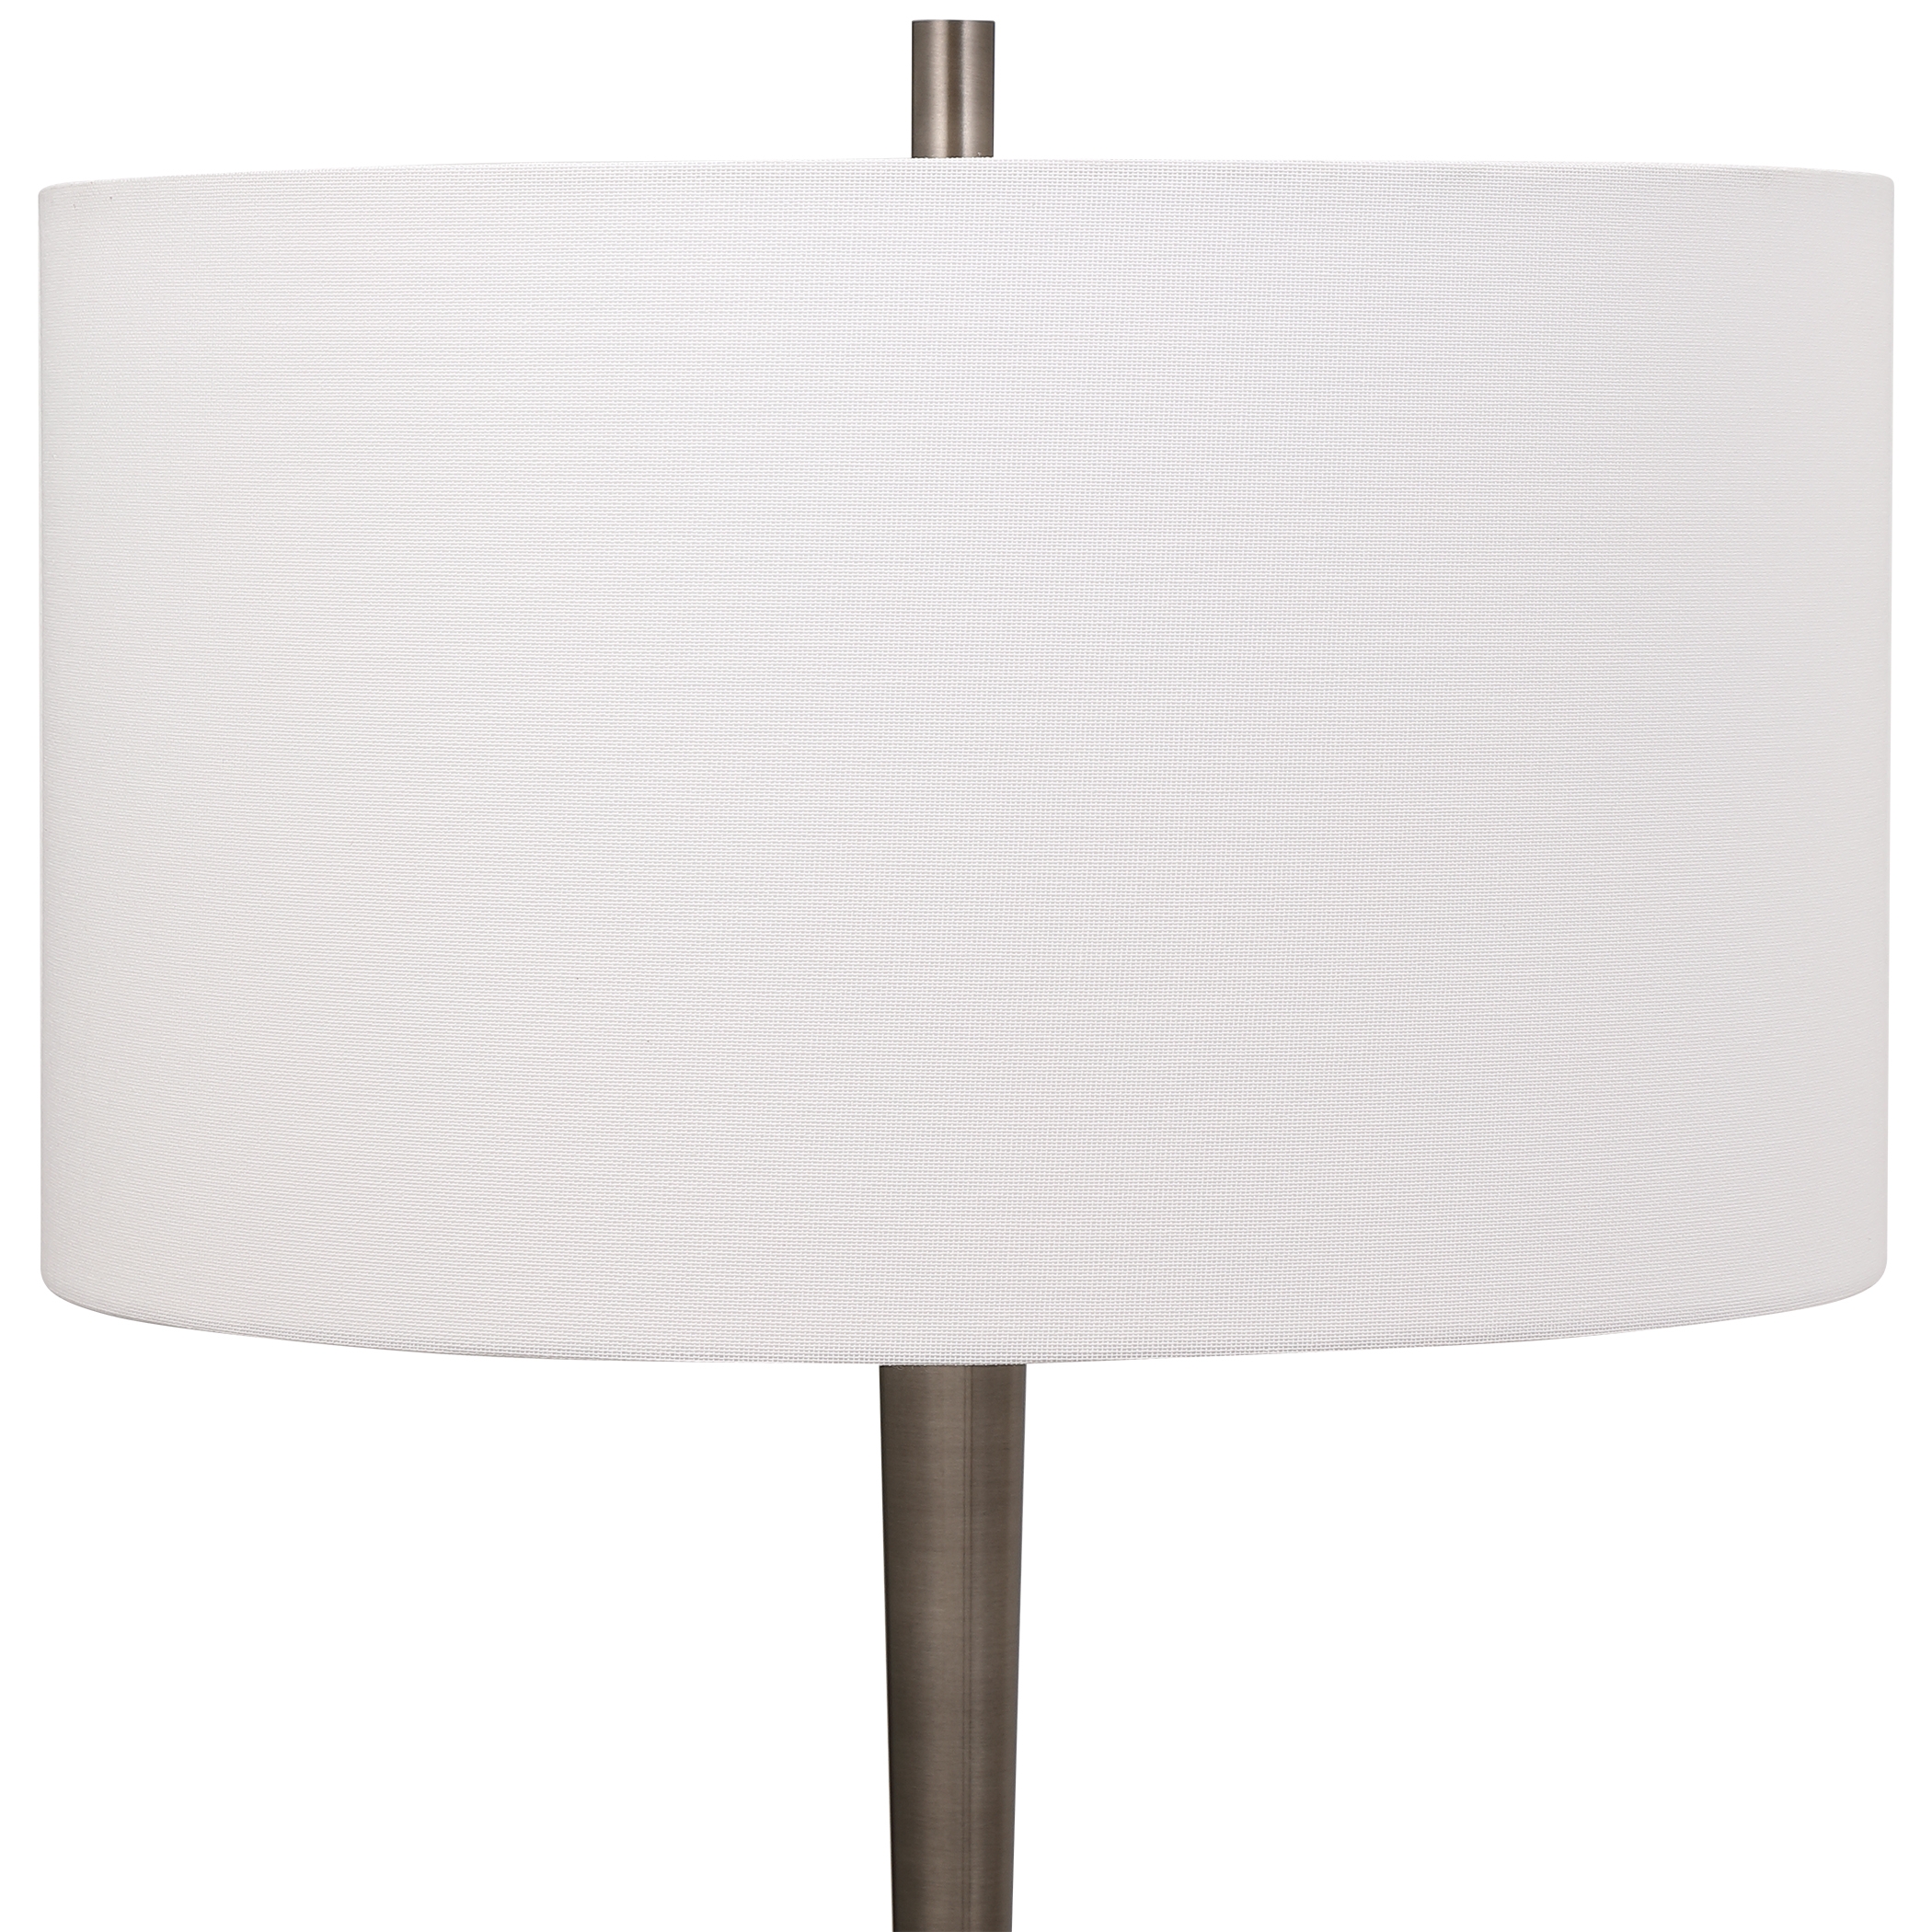 Danes Modern Table Lamp - Image 3